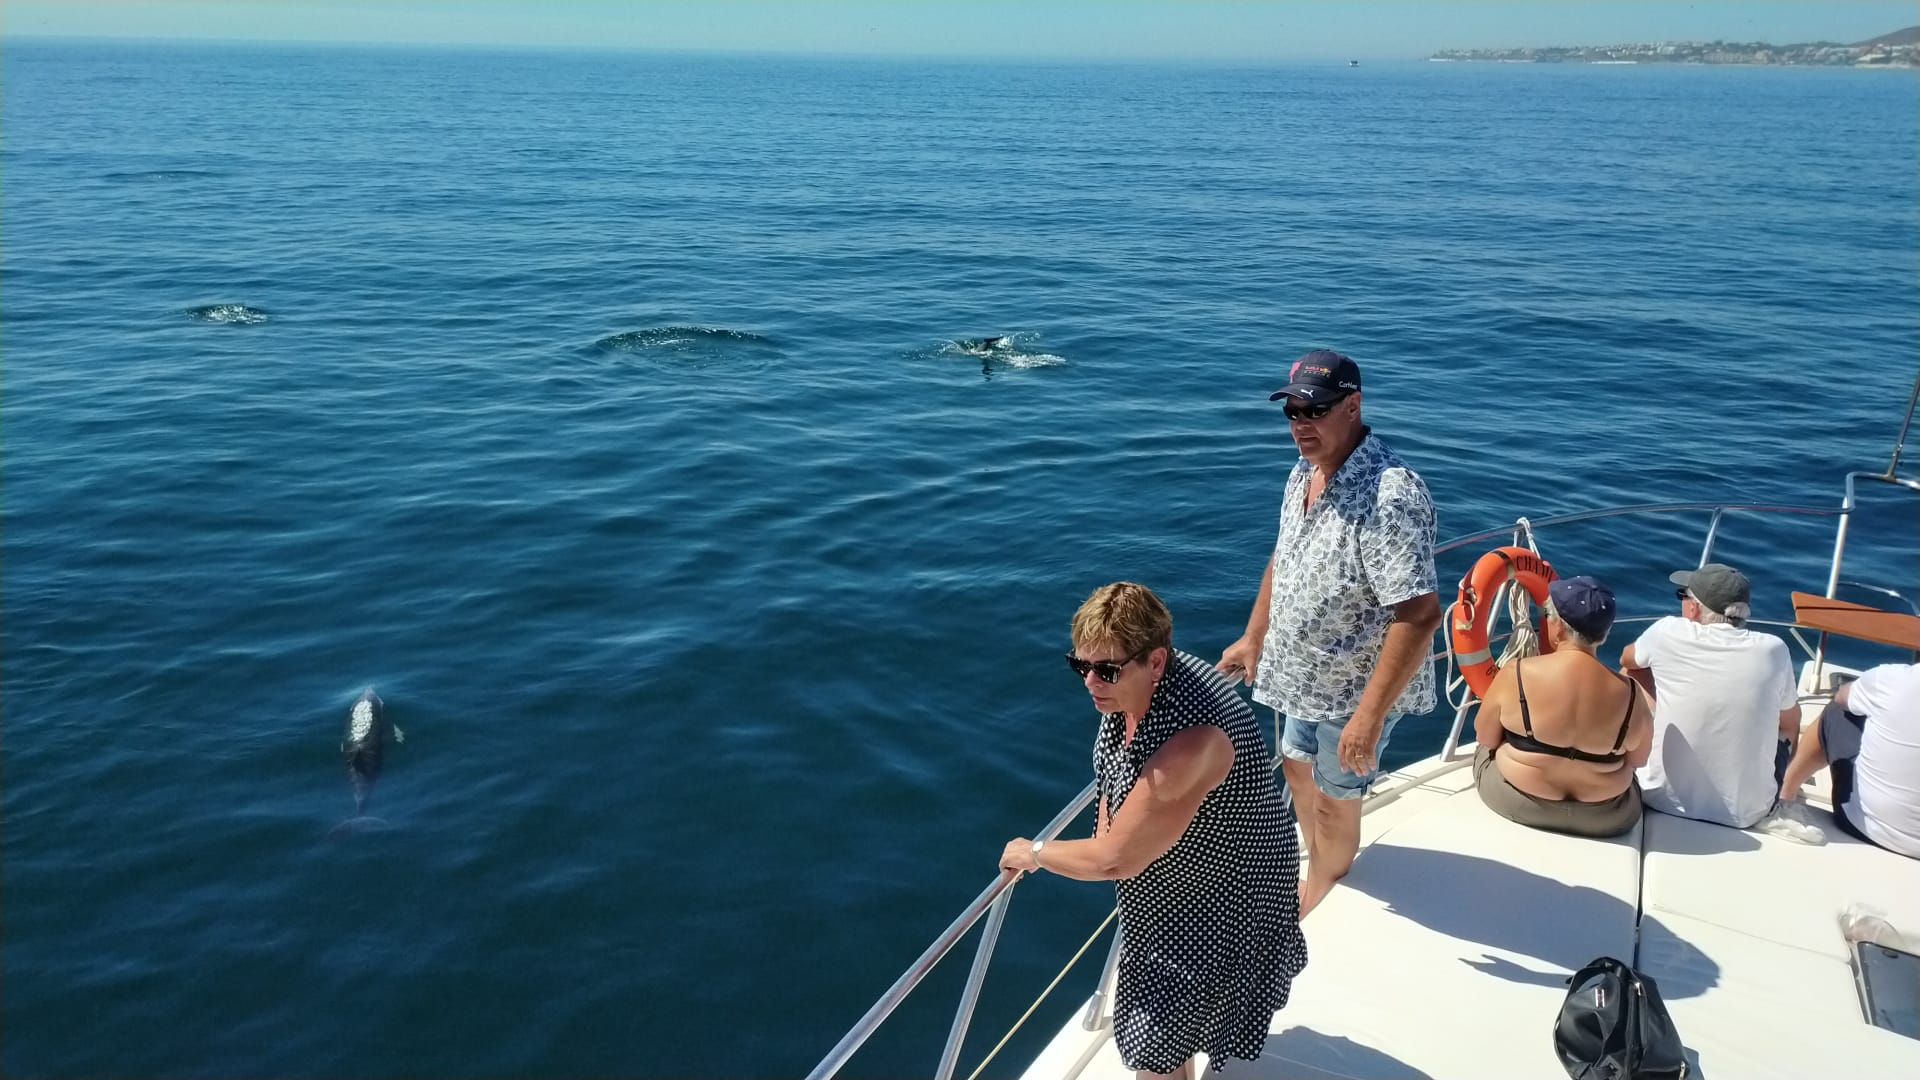 Dolphin Watching Yacht Cruise in Fuengirola